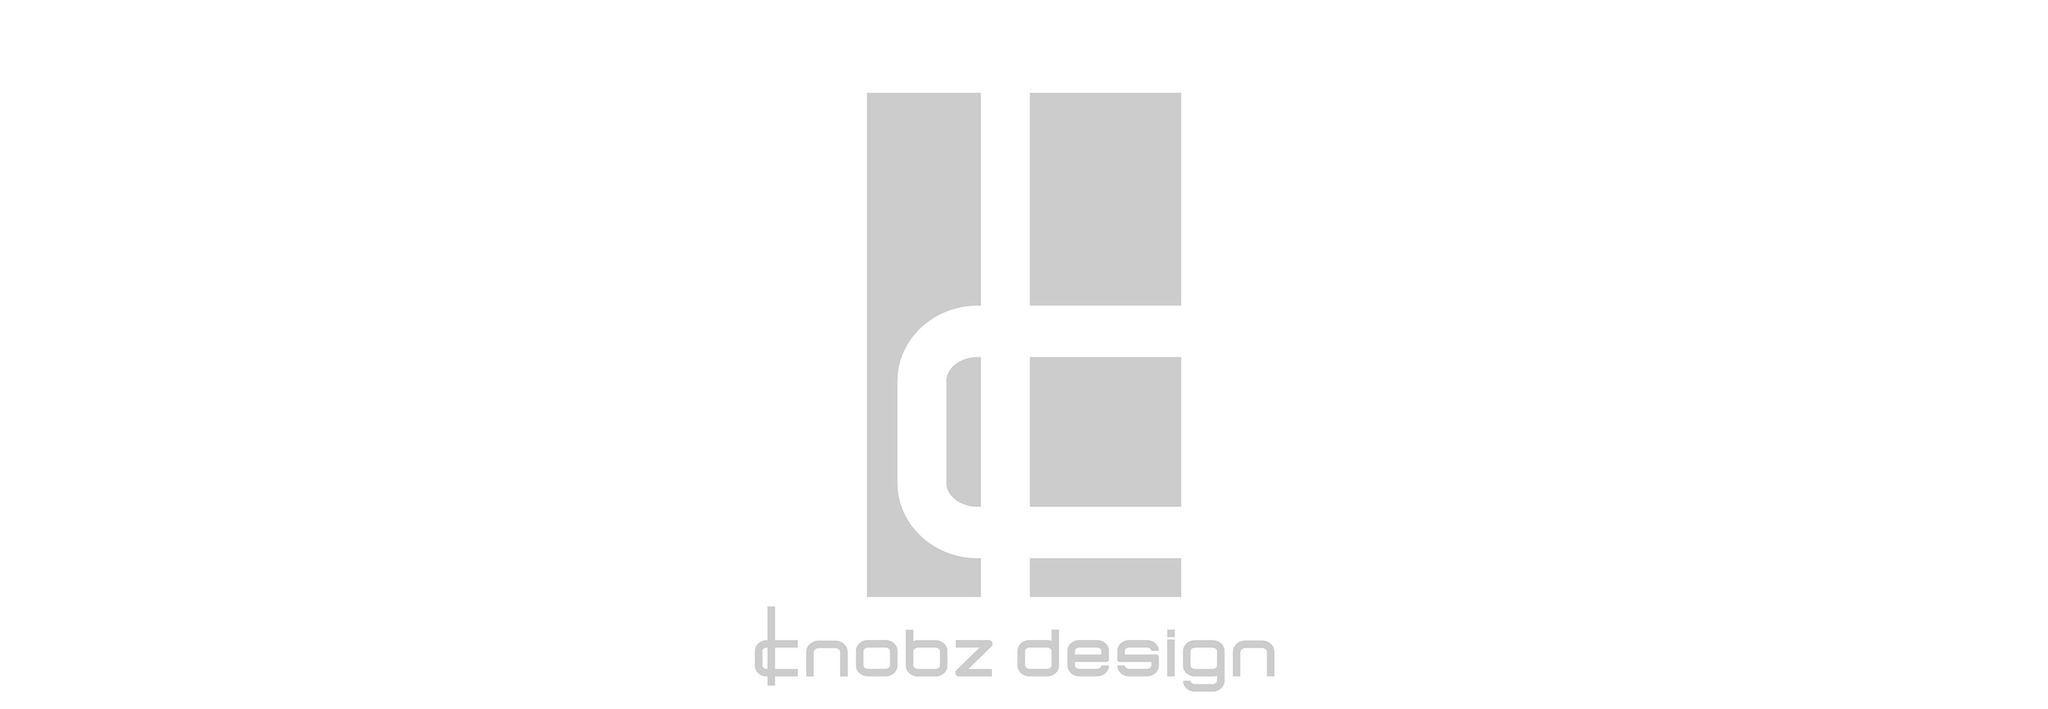 knobz design